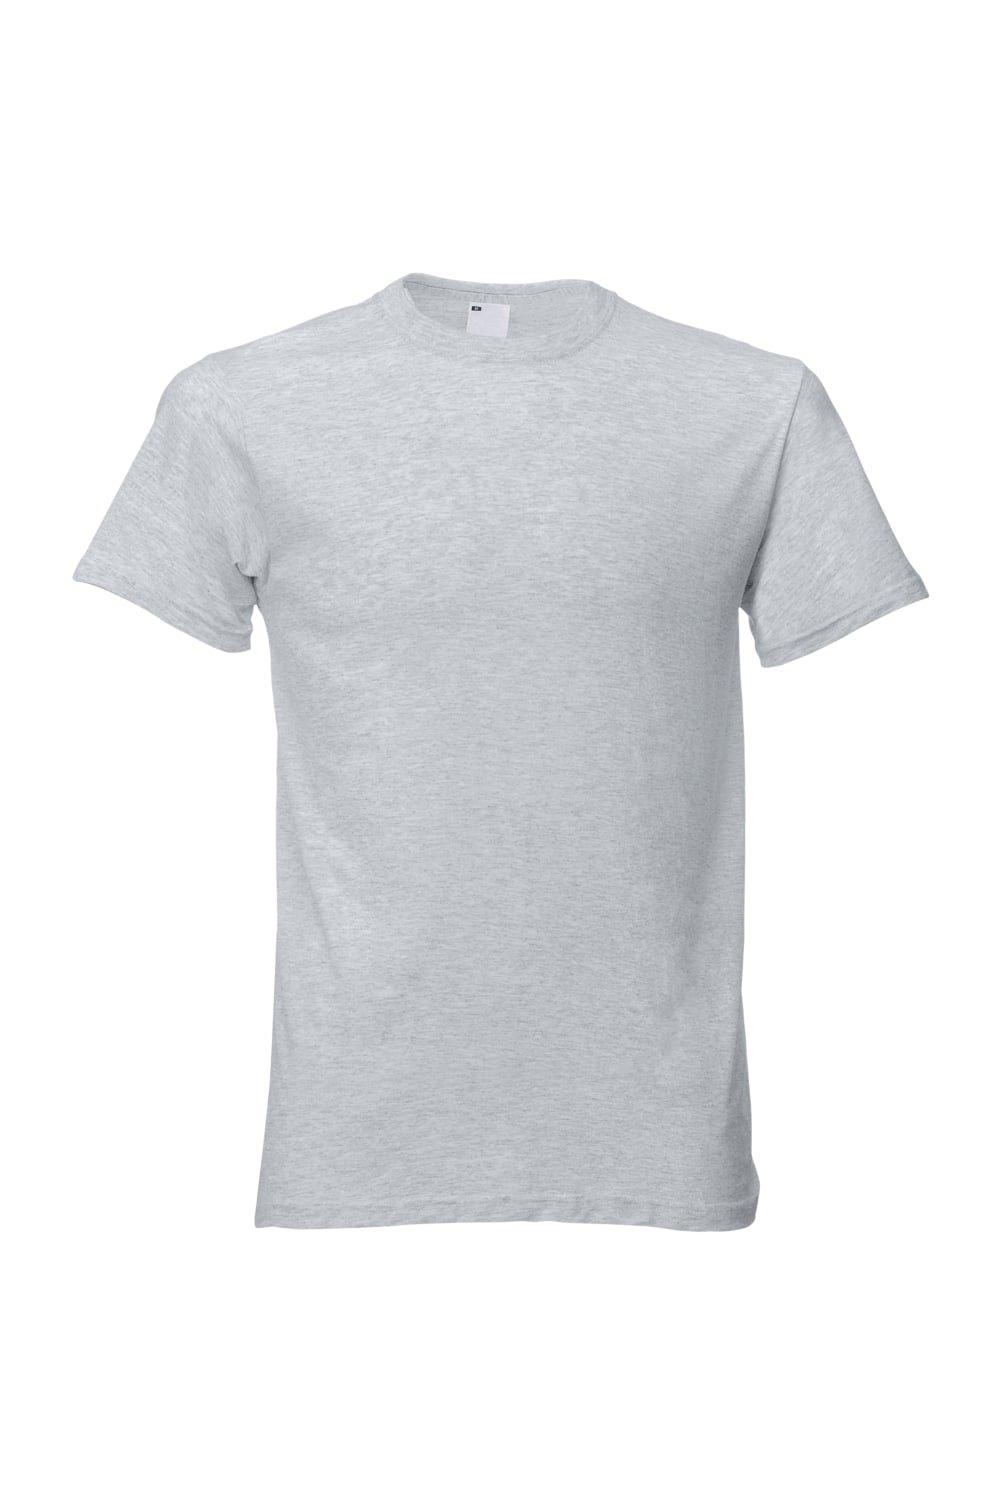 Повседневная футболка с коротким рукавом Universal Textiles, серый повседневная футболка с коротким рукавом universal textiles синий